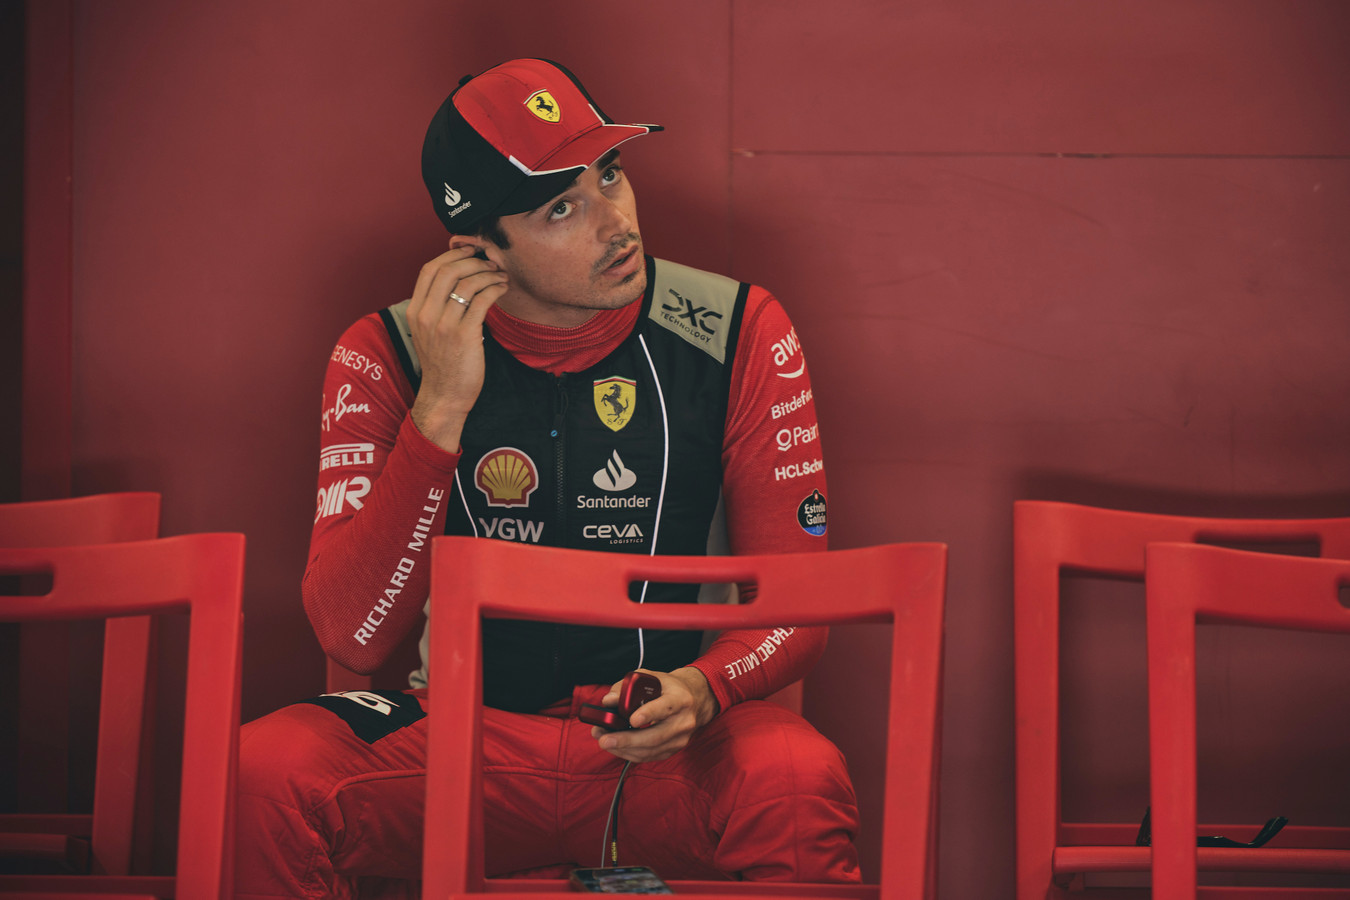 C. Leclercas ragina nebeplėsti F-1 sezono tvarkaraščio